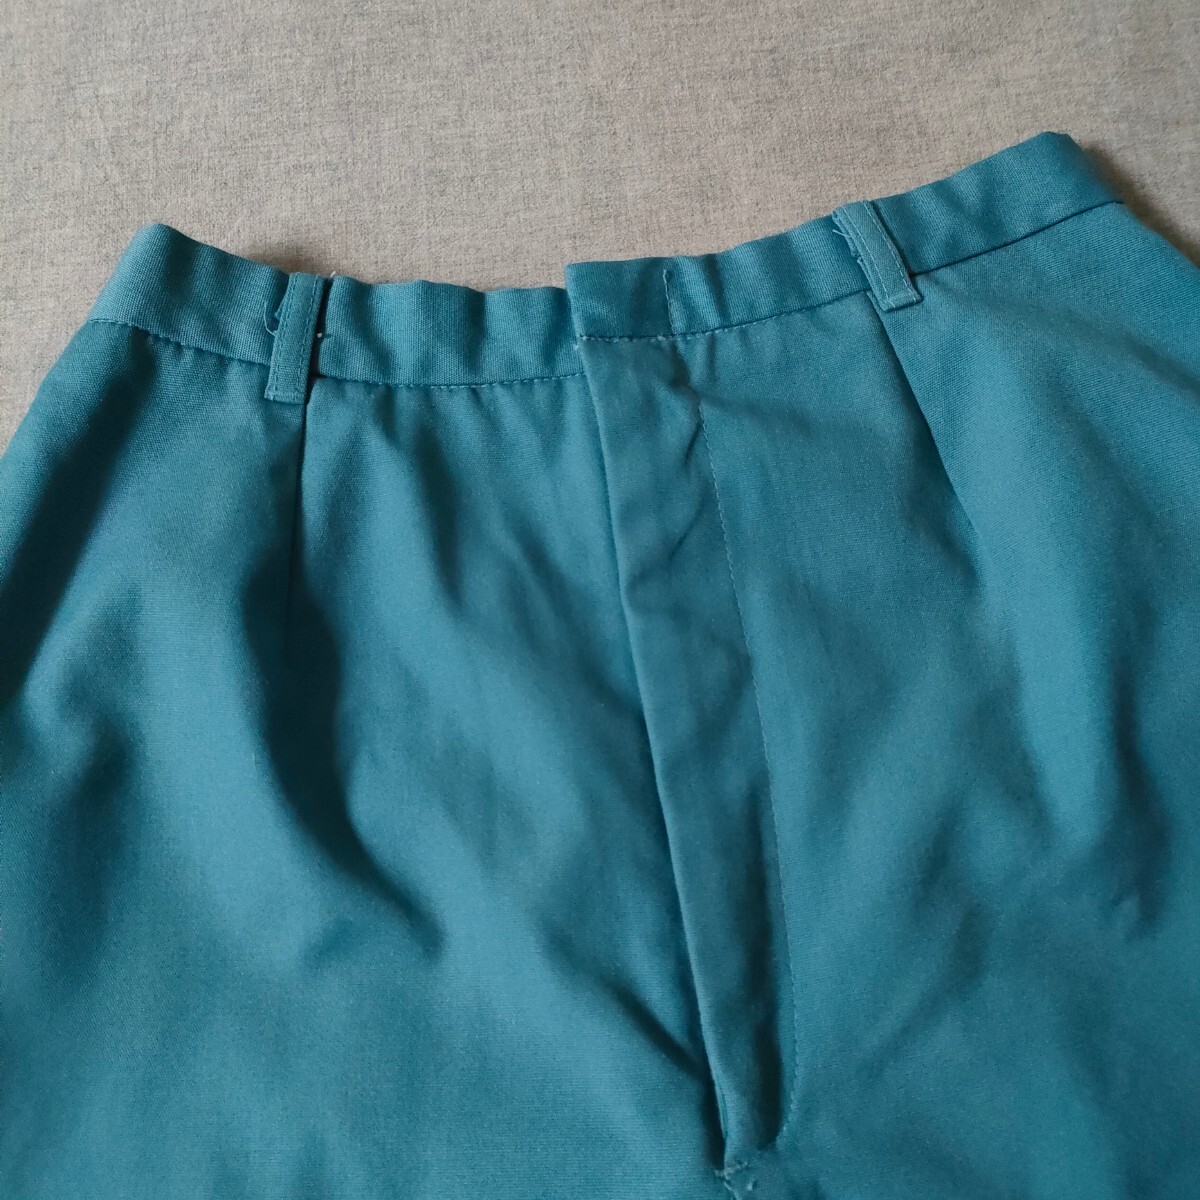 Sears USA古着 キュロットスカート パンツ ズボン ショート丈 ブルー アメリカ スカッツ スカパン ガウチョ ハーフパンツ ブルー 水色